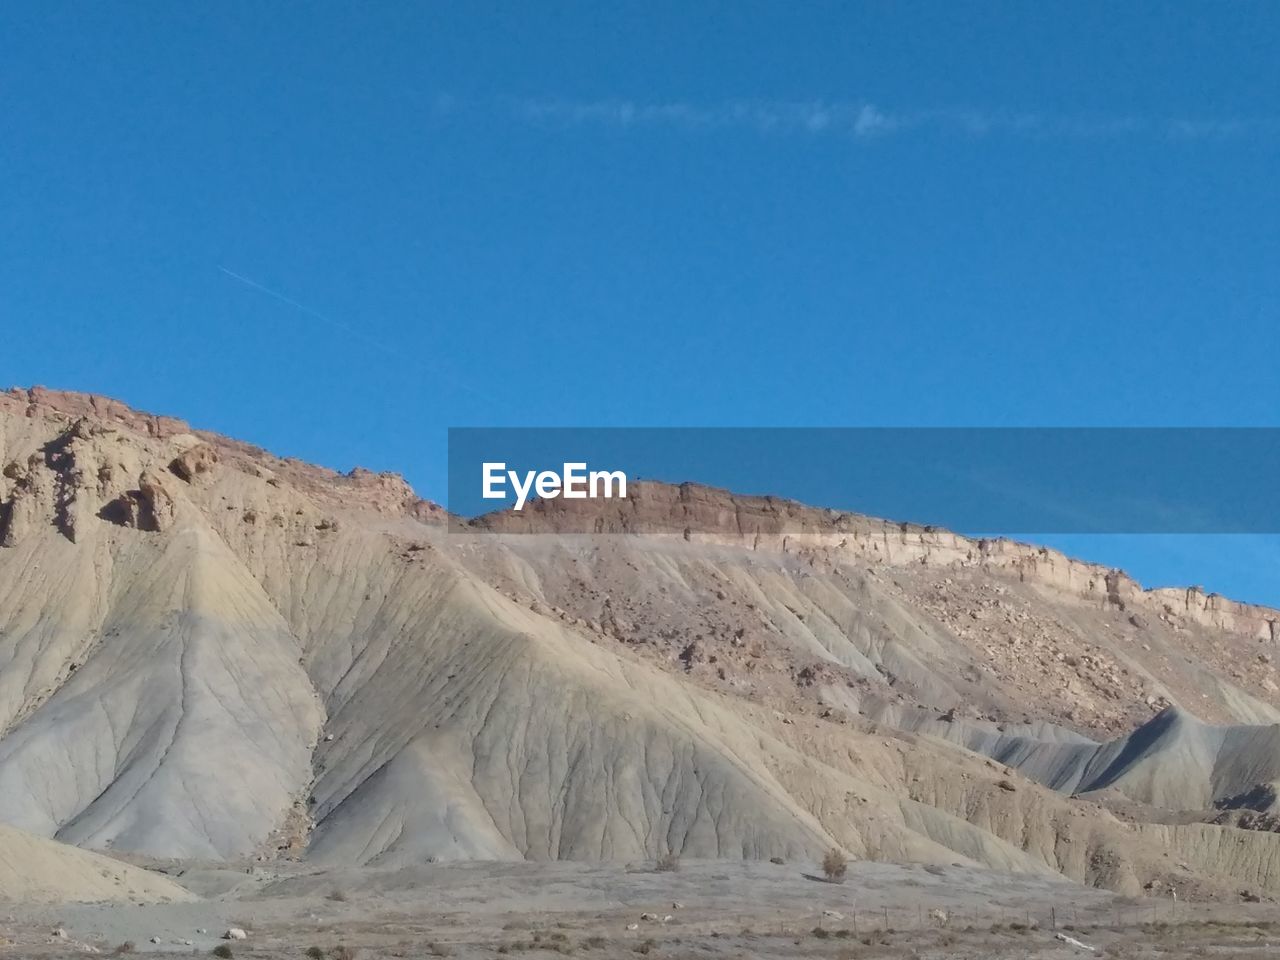 SCENIC VIEW OF DESERT LANDSCAPE AGAINST CLEAR BLUE SKY